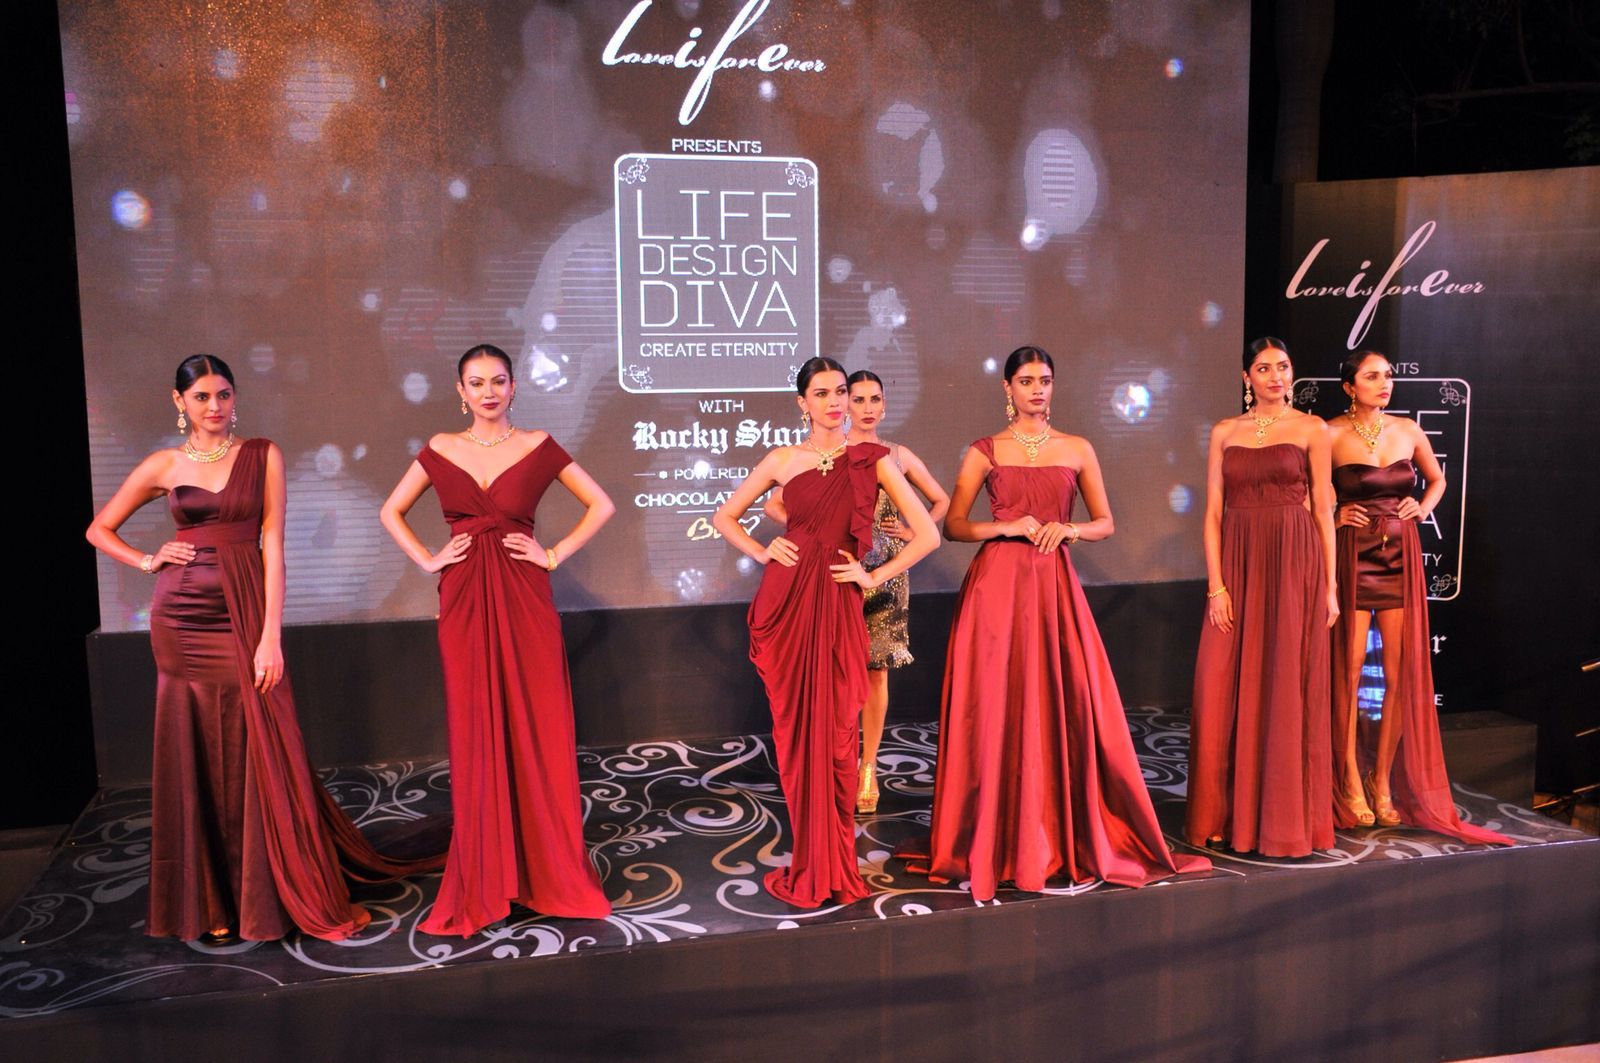 LIFE Design Diva Awards 2016